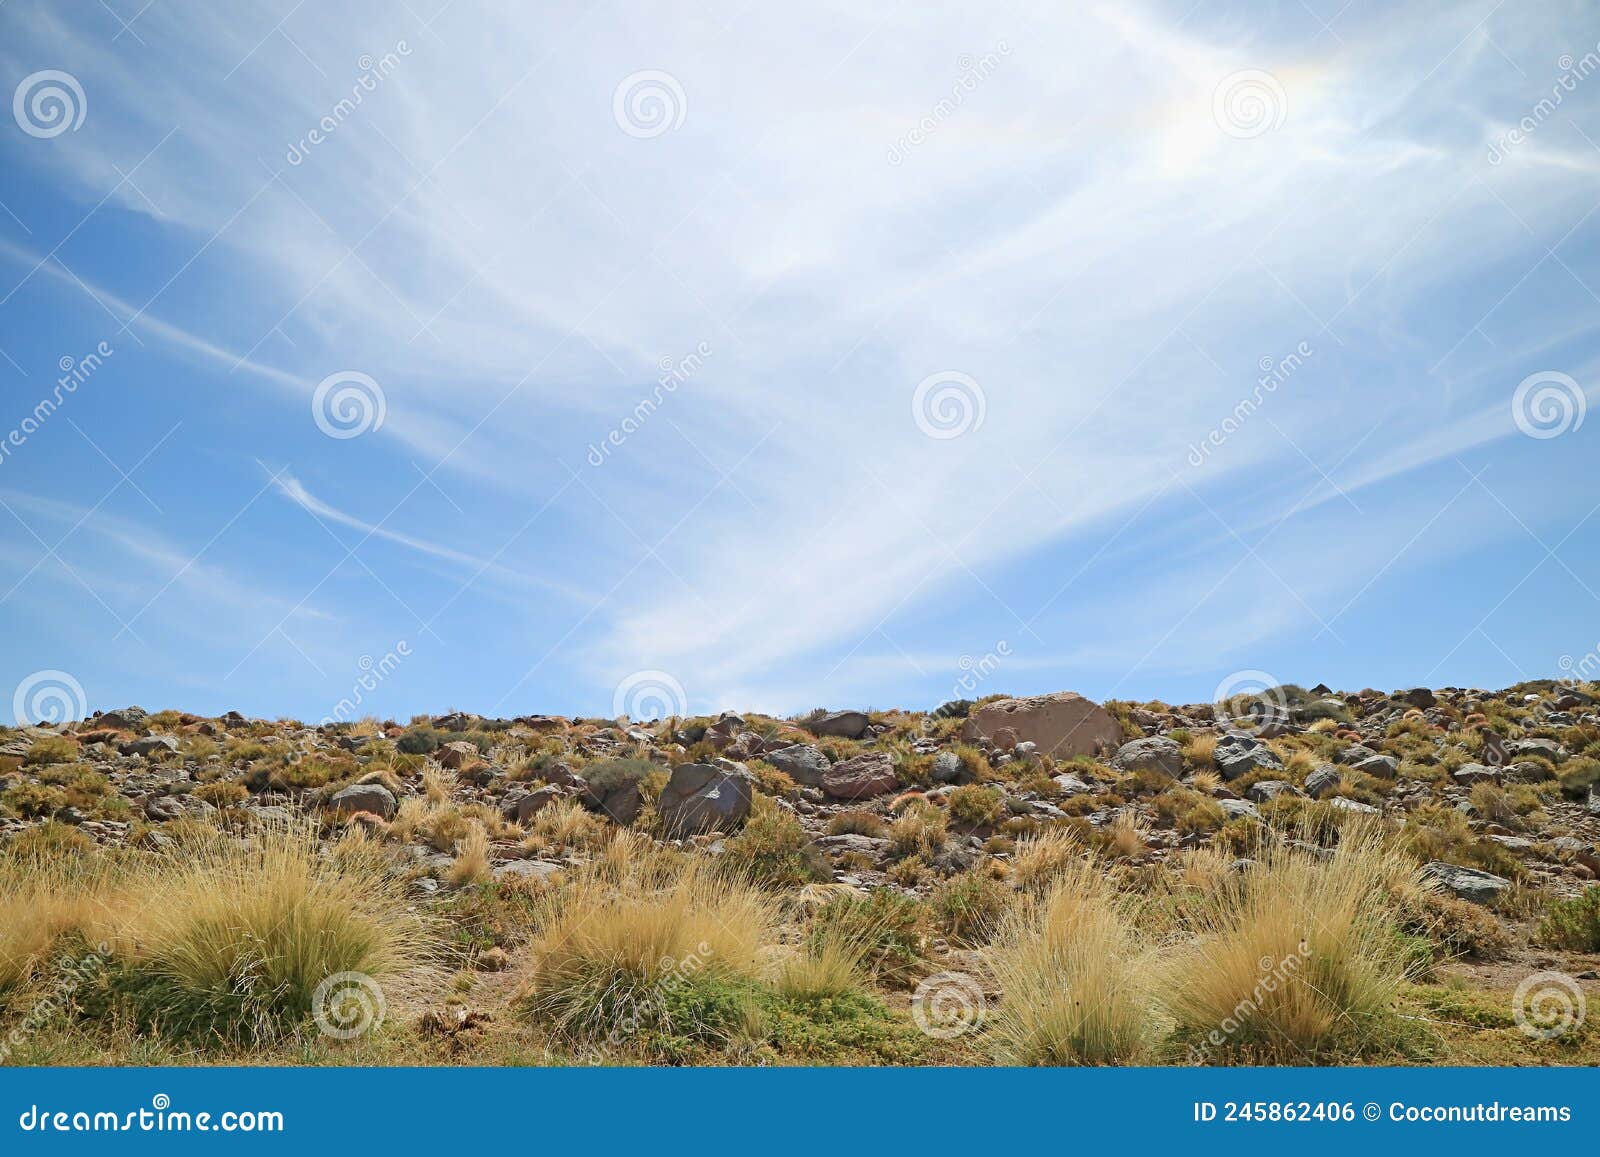 paja ichu or peruvian feather grass, amazing desert plants in atacama desert, antofagasta region of northern chile